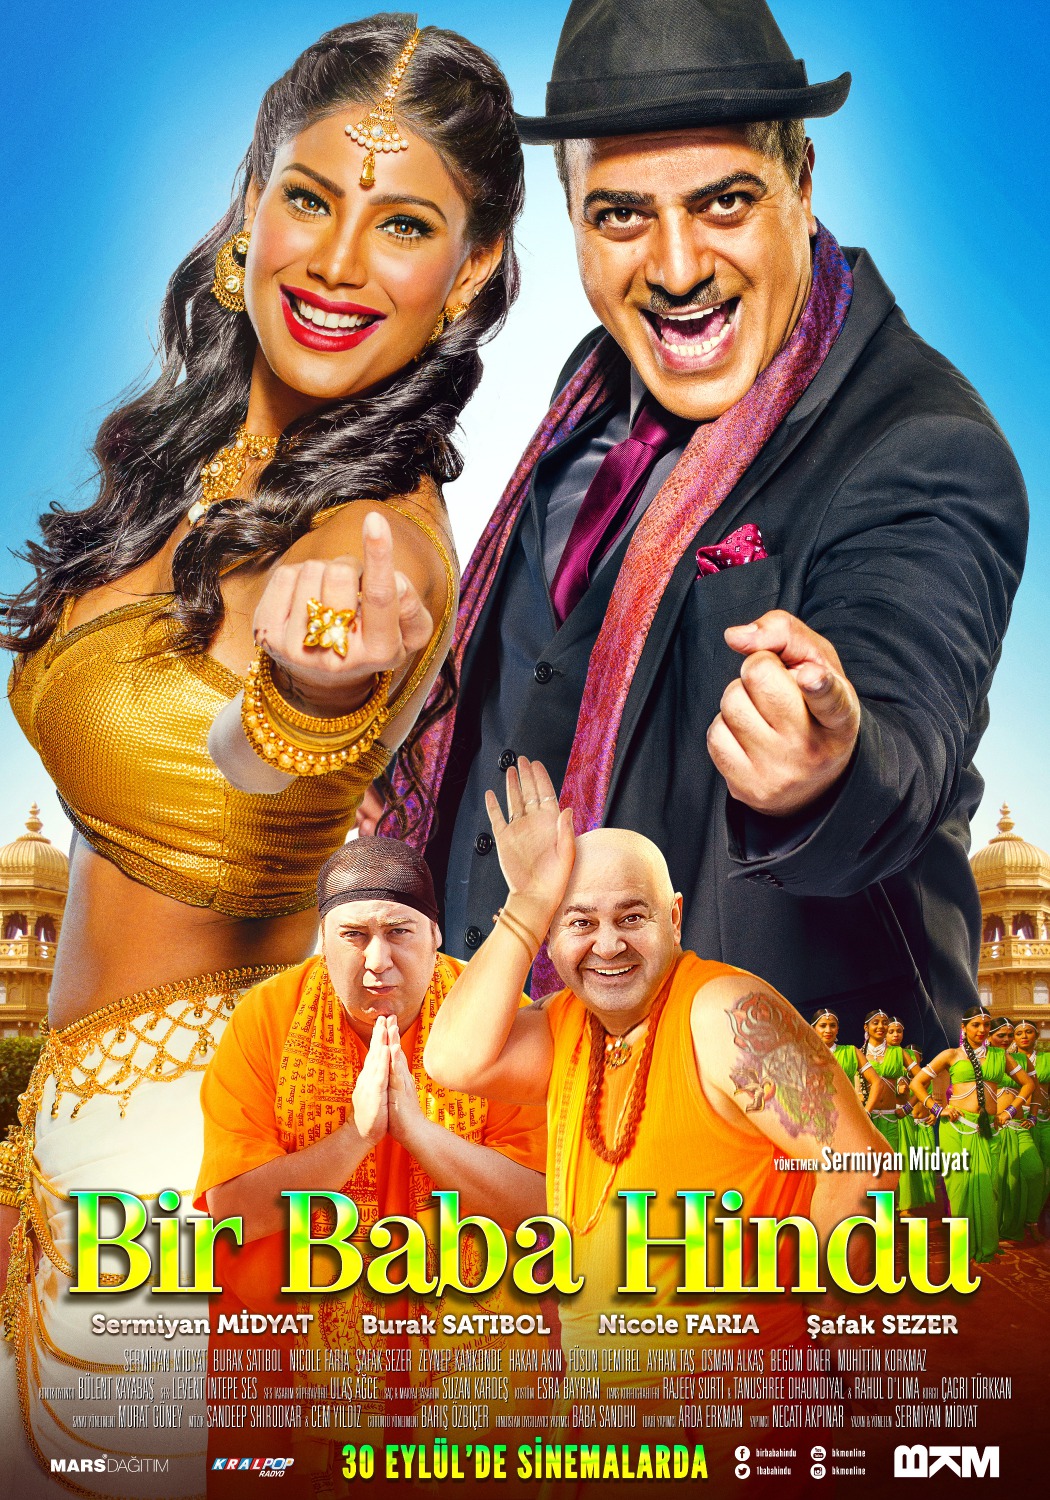 Extra Large Movie Poster Image for Bir Baba Hindu (#1 of 2)